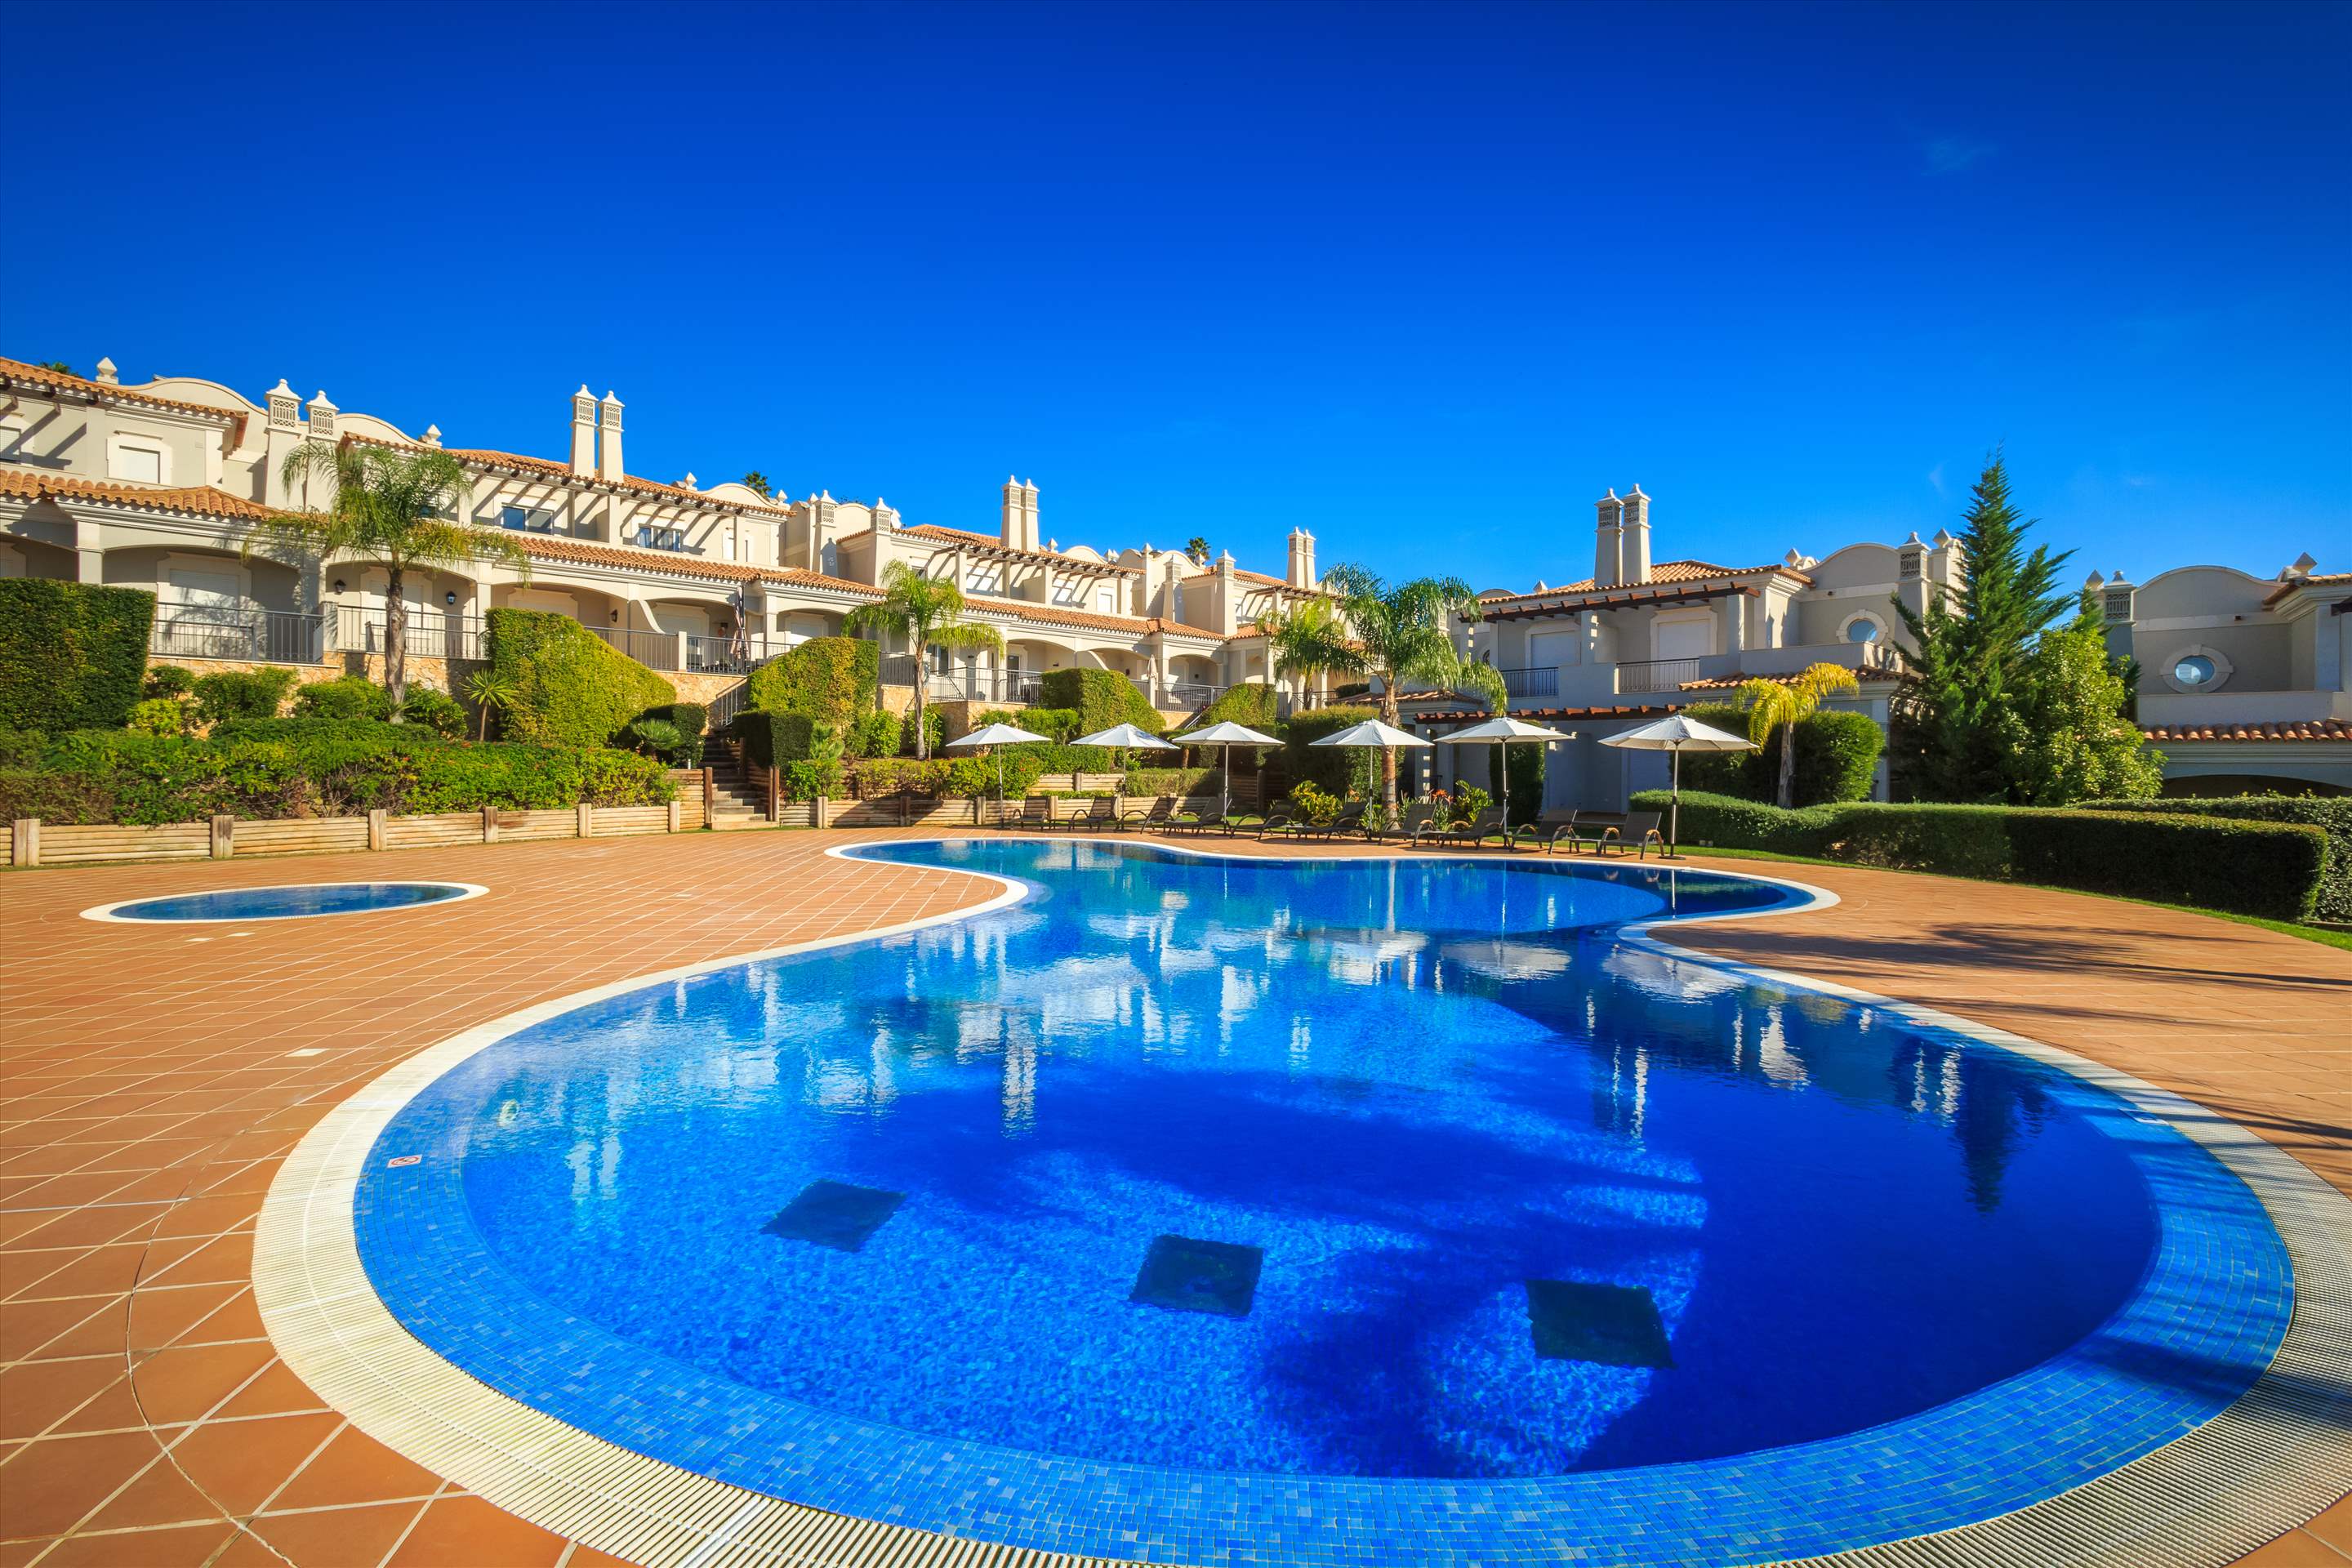 The Crest Townhouse, Three Bedroom Rate, 3 bedroom villa in Quinta do Lago, Algarve Photo #1